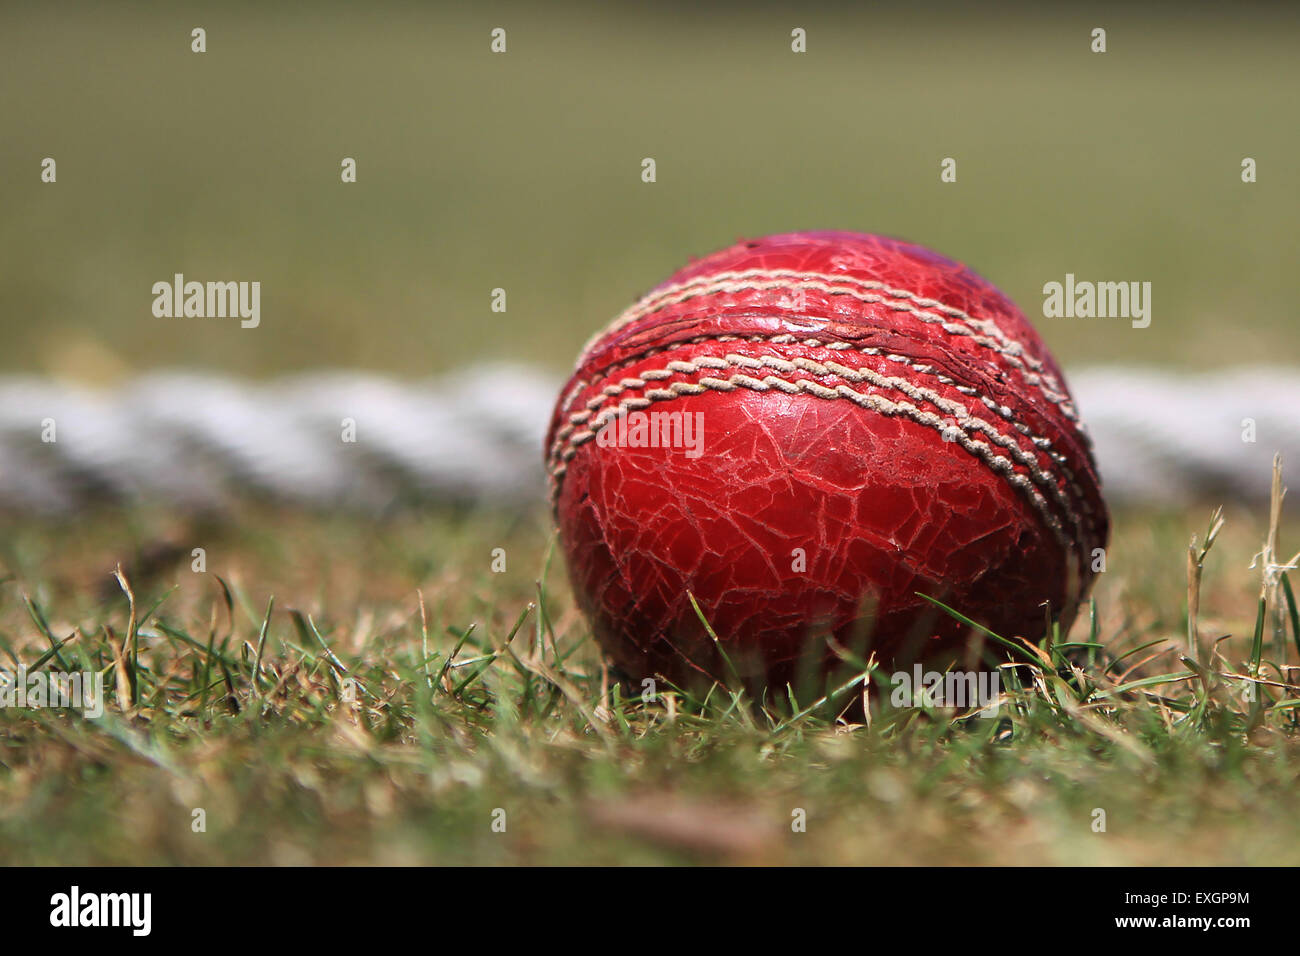 Cricket - Kent Cricket League Division IV 1st XI - Faversham Cricket Club v Cowdrey Cricket Club Stock Photo